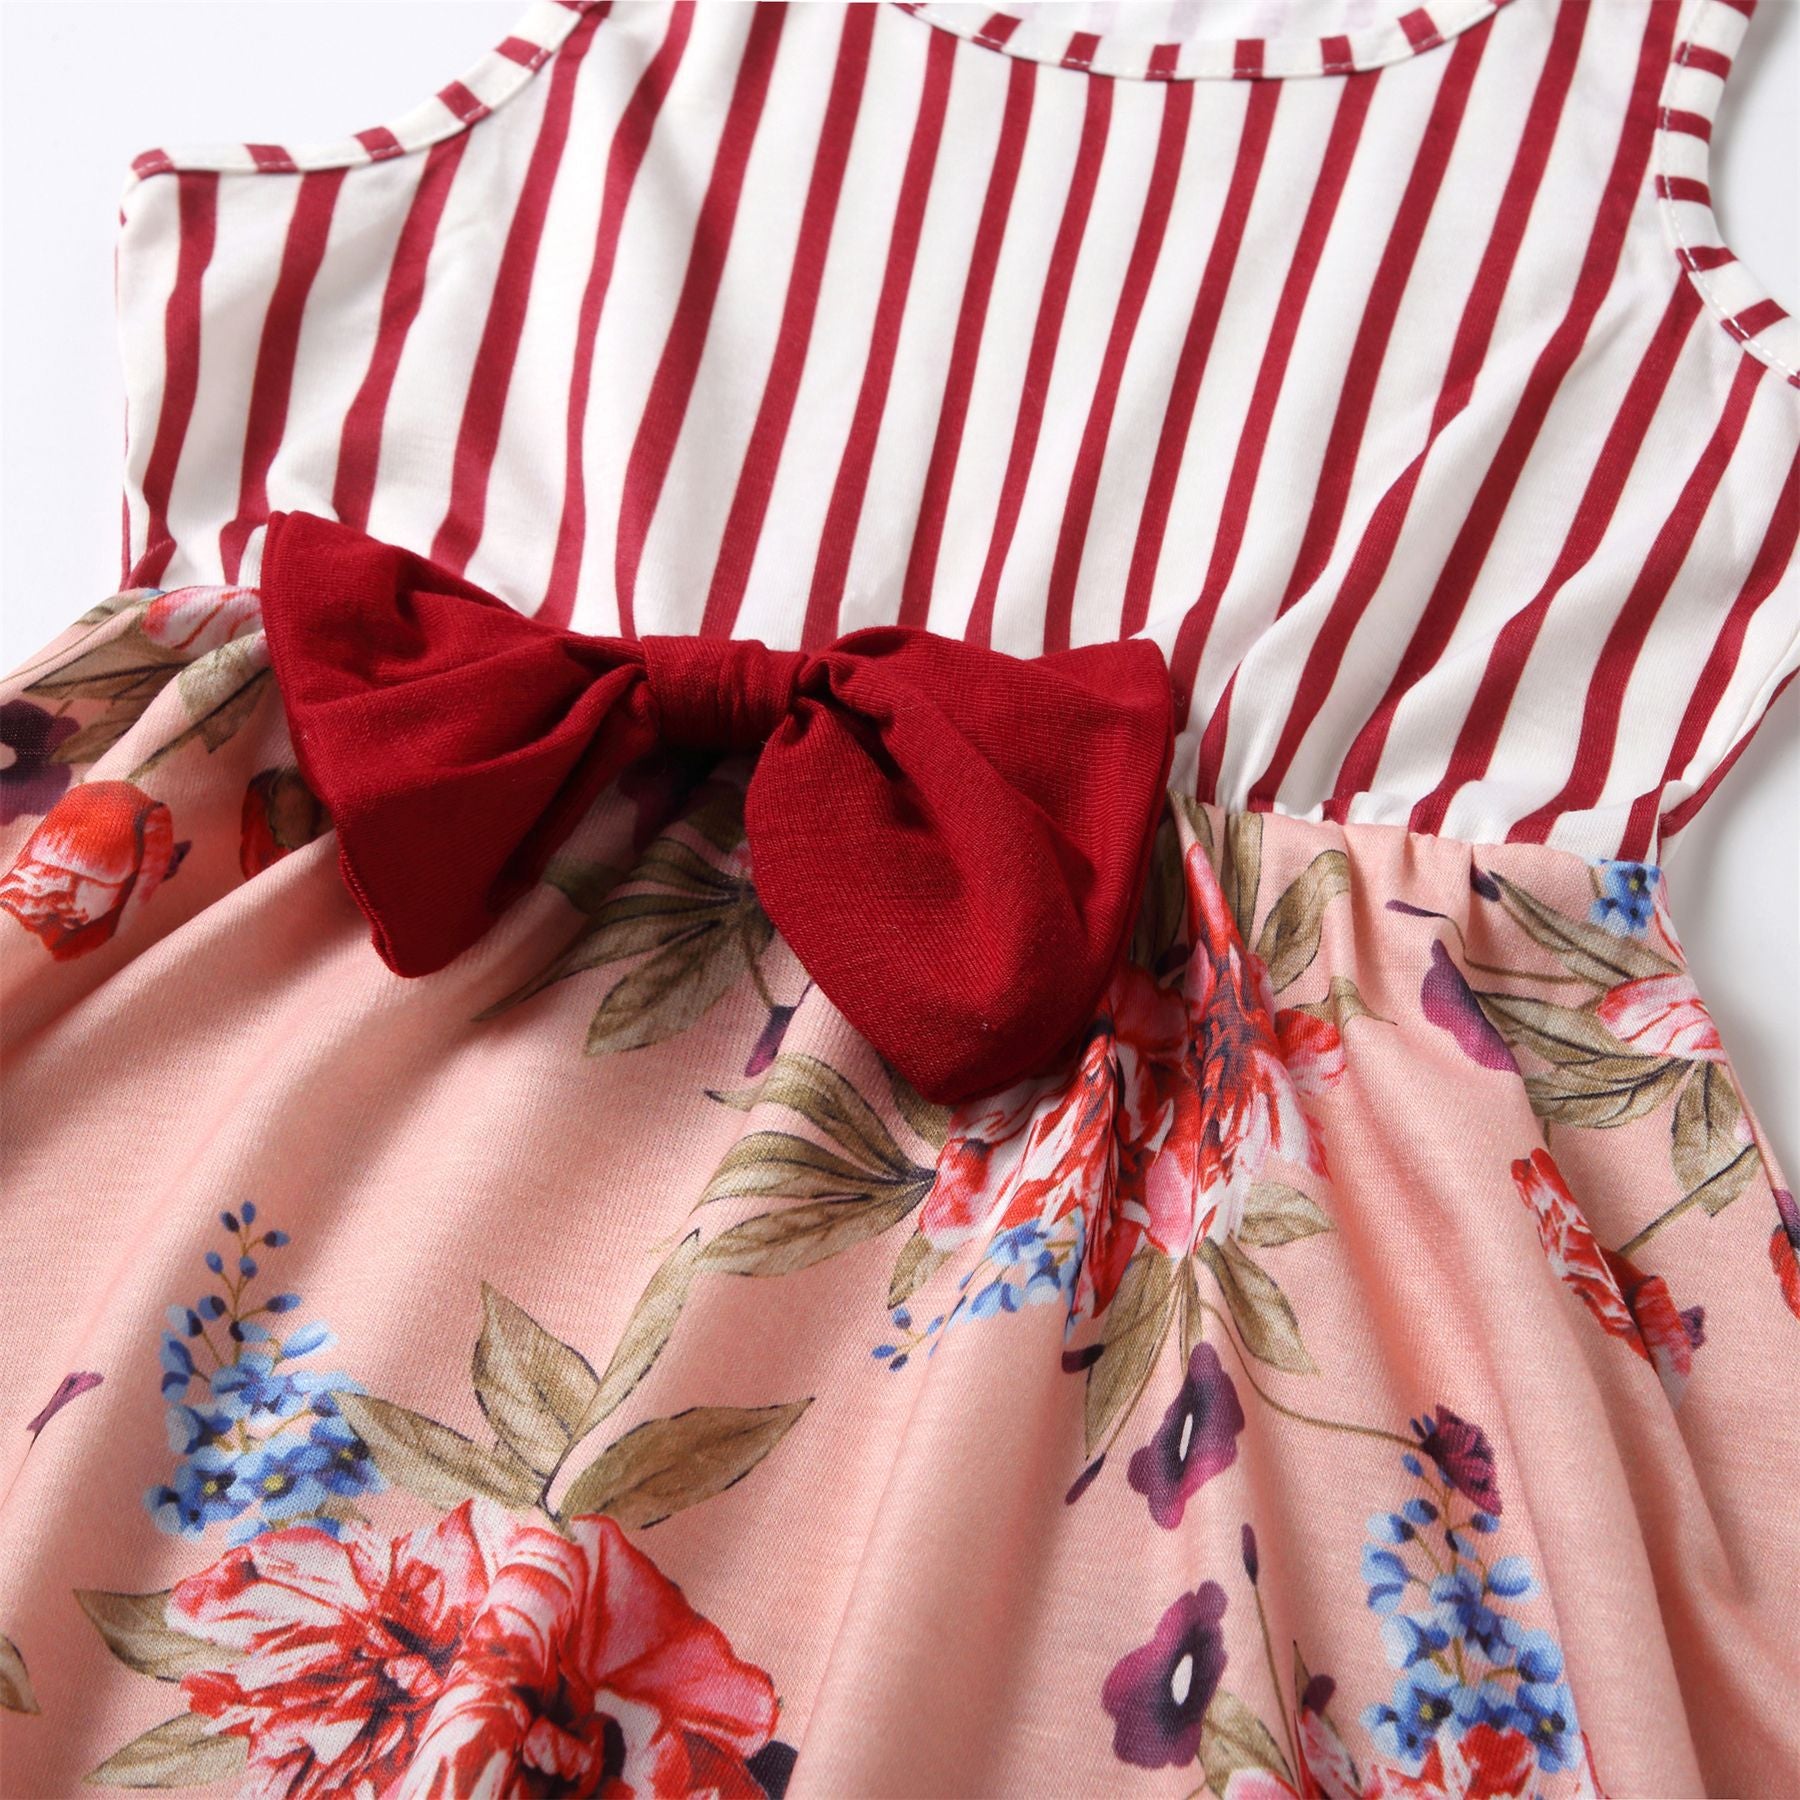 Flower stripe stitched bow dress parent-child dress